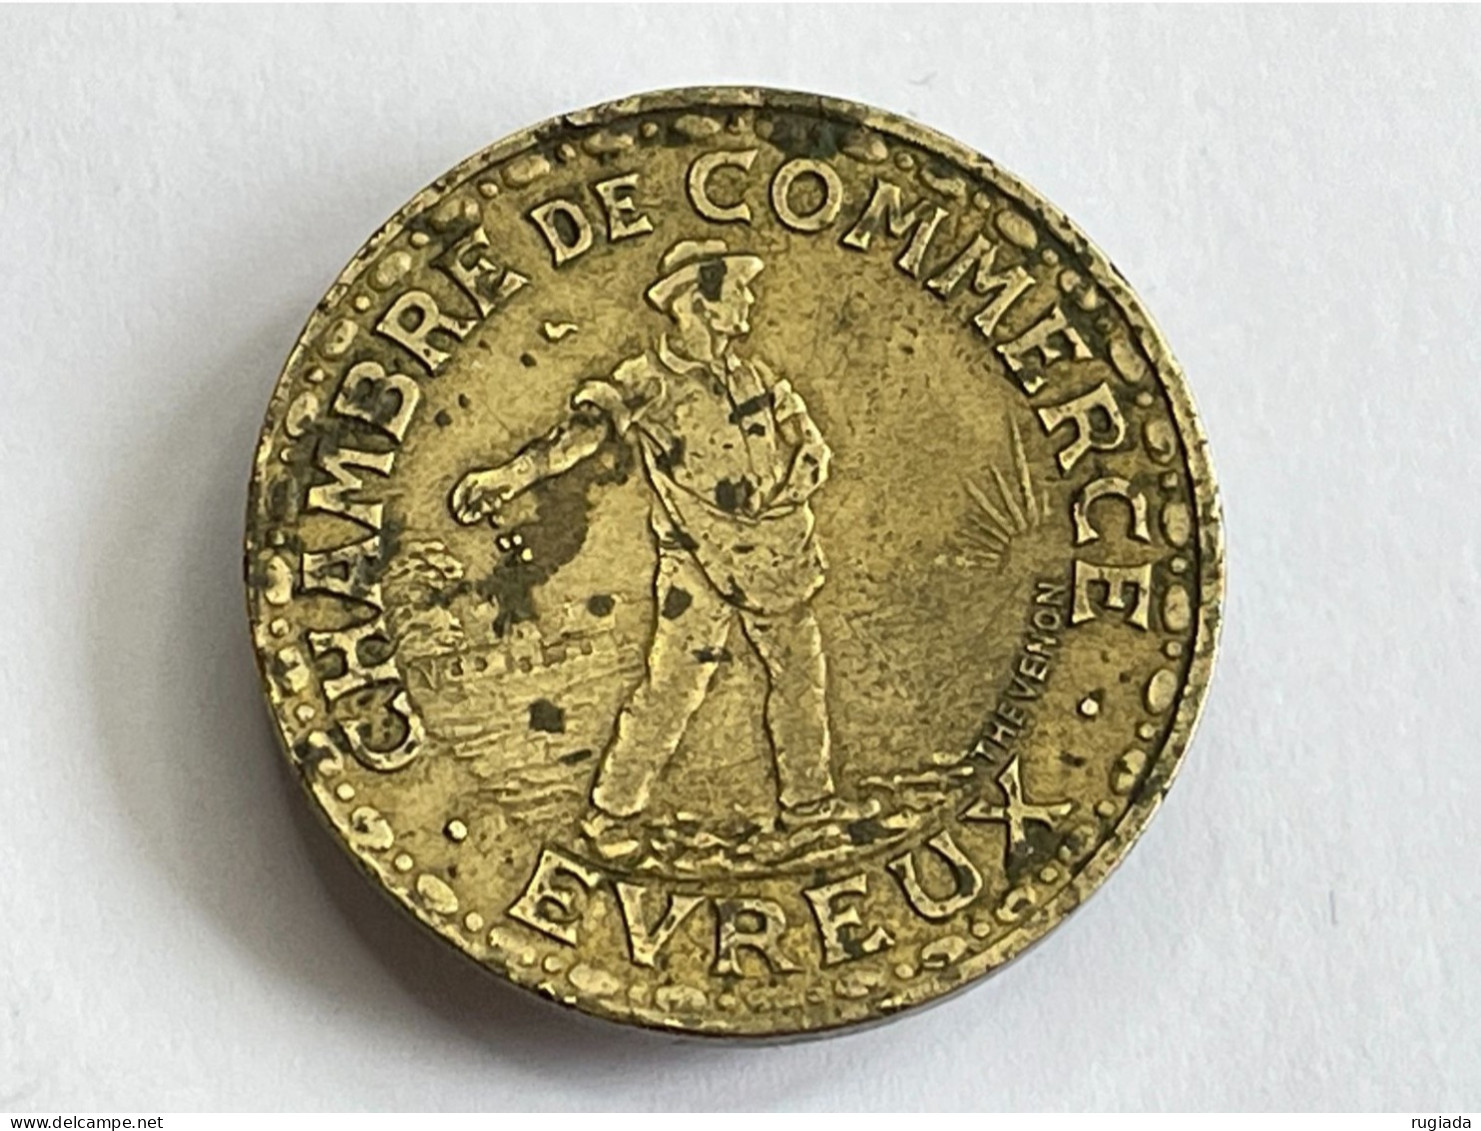 1922 France Evreux 1 Franc Brass Coin, Emergency Money, VF Very Fine - 1 Franc